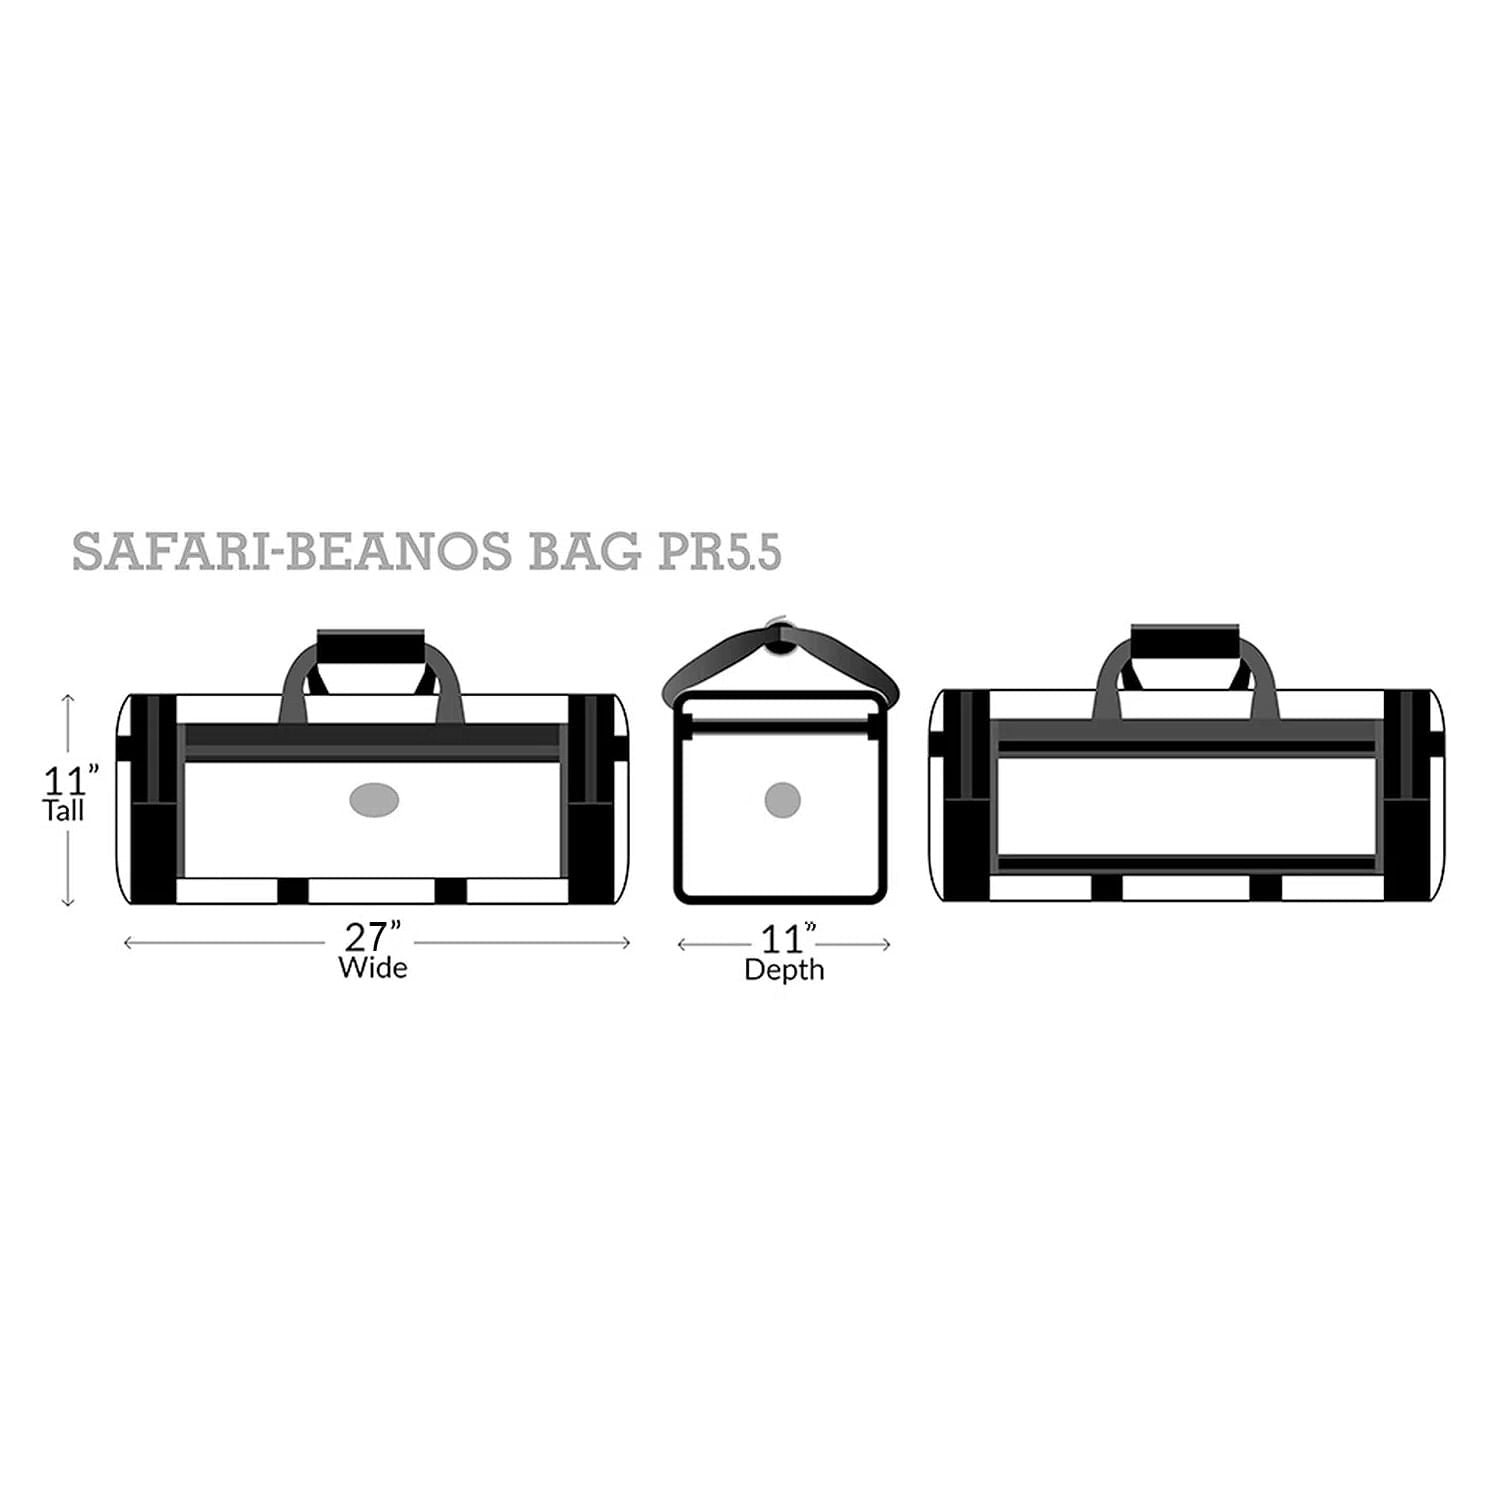 PR 5.5 Safari Beanos dimensions 11 inches tall x 27 inches wide x 11 inches depth. 